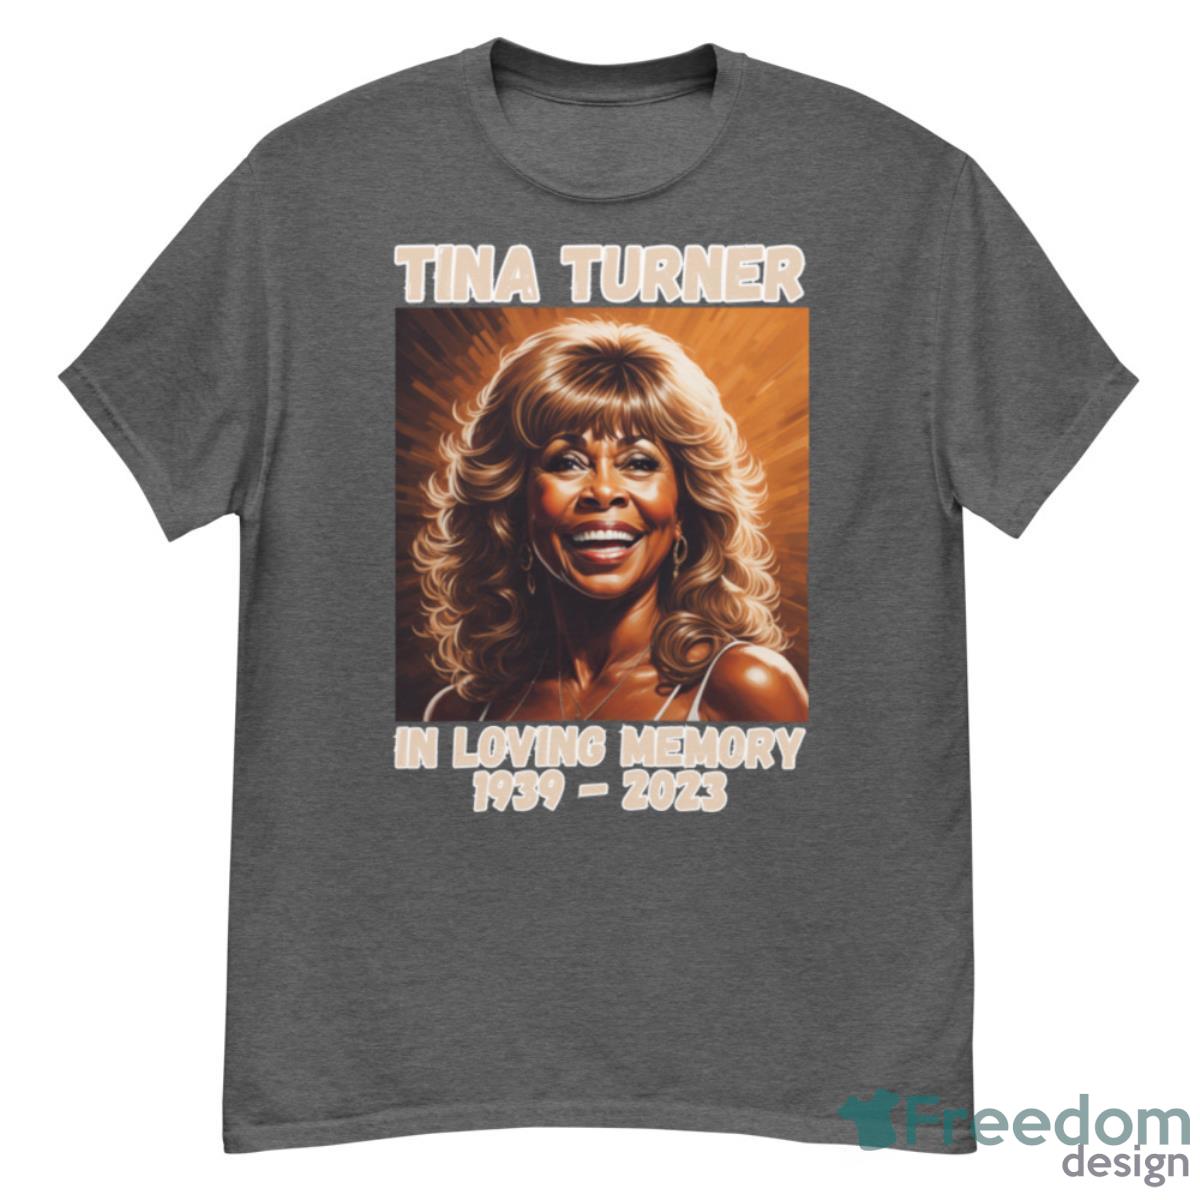 Tina Turner in Loving Memory Shirt - G500 Men’s Classic T-Shirt-1